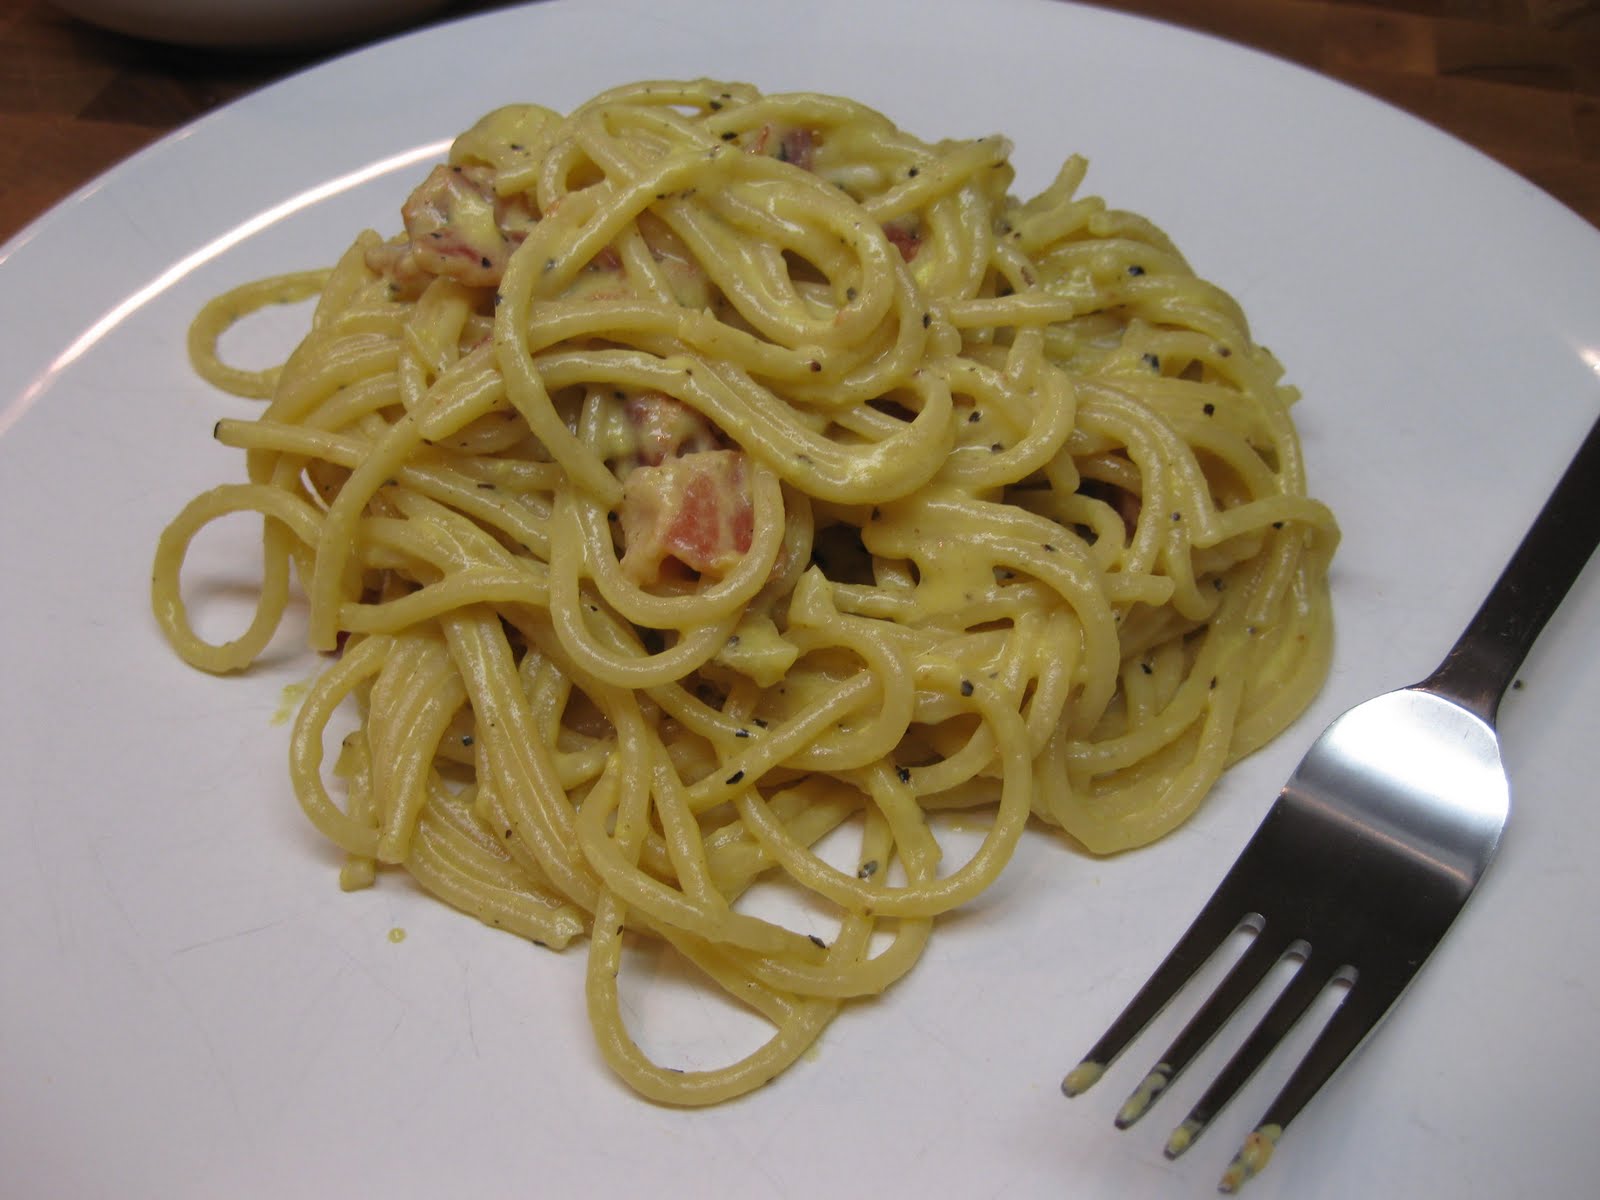 Dinner at Christina's: Spaghetti Carbonara